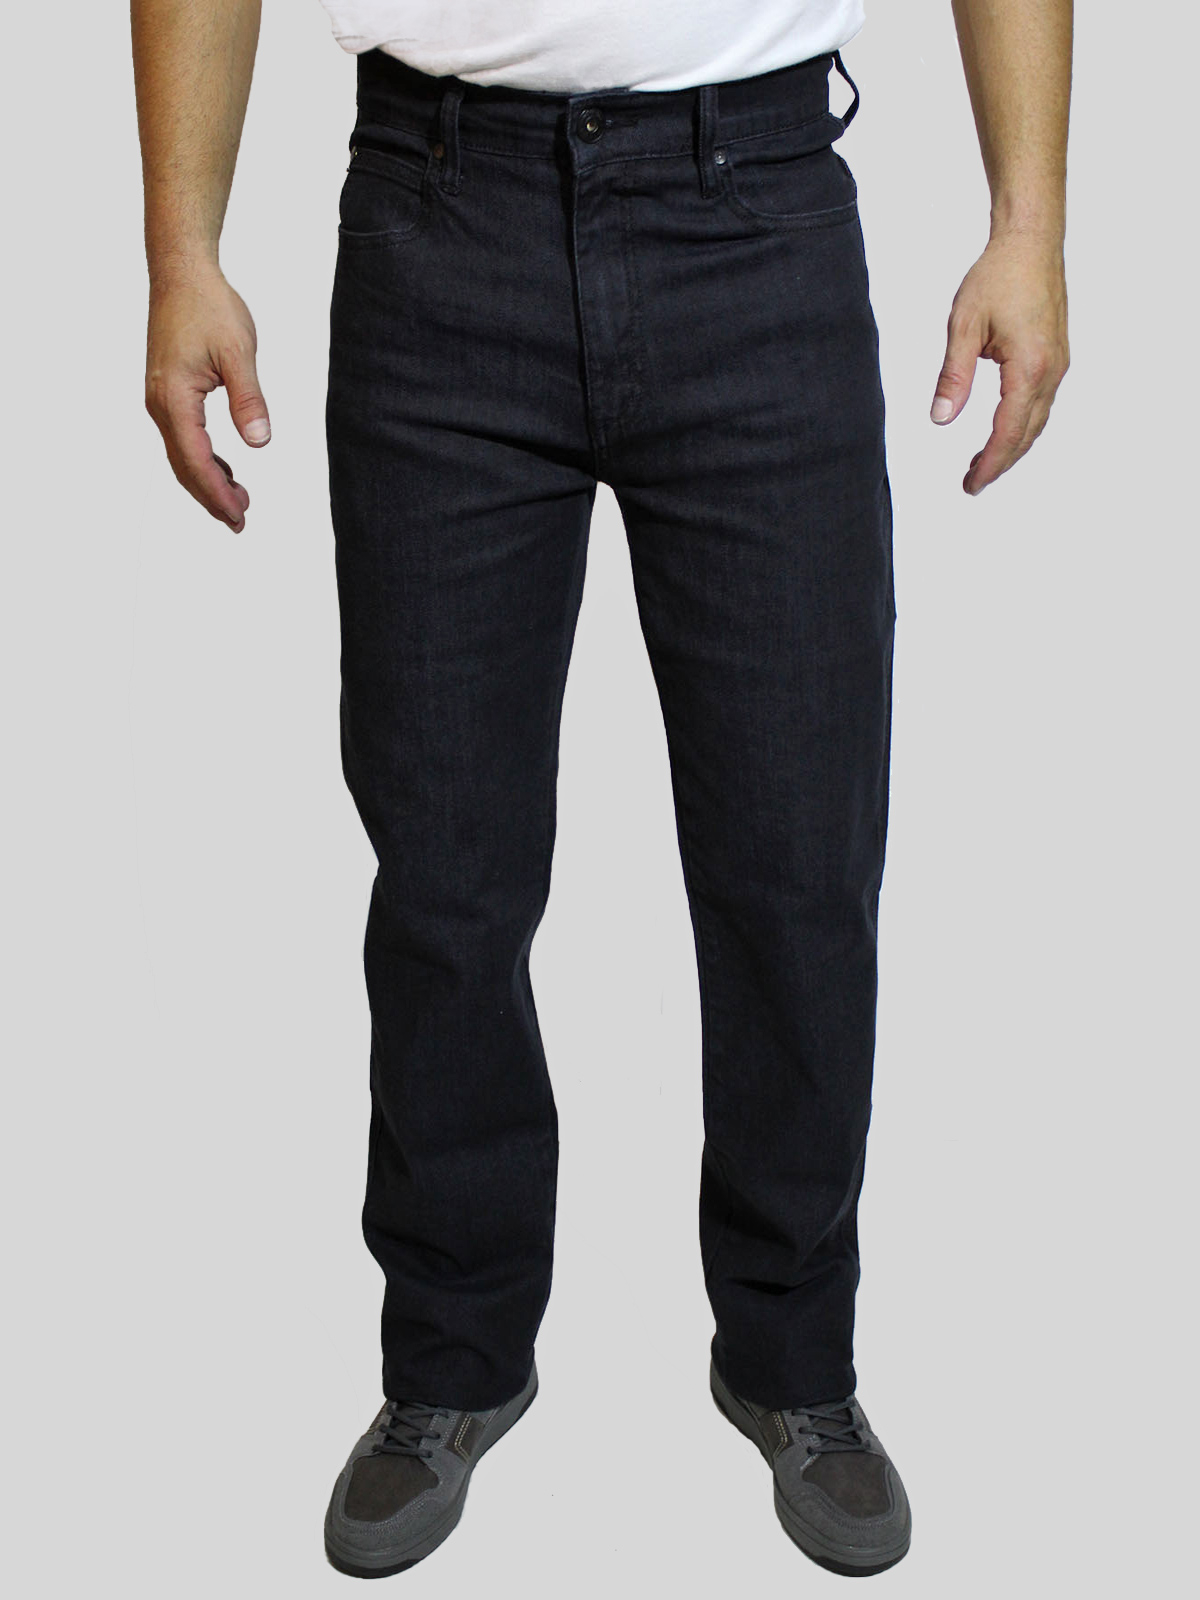 Takhiro pantalons texans d'home bàsics rectes 21120/71 negre rentat